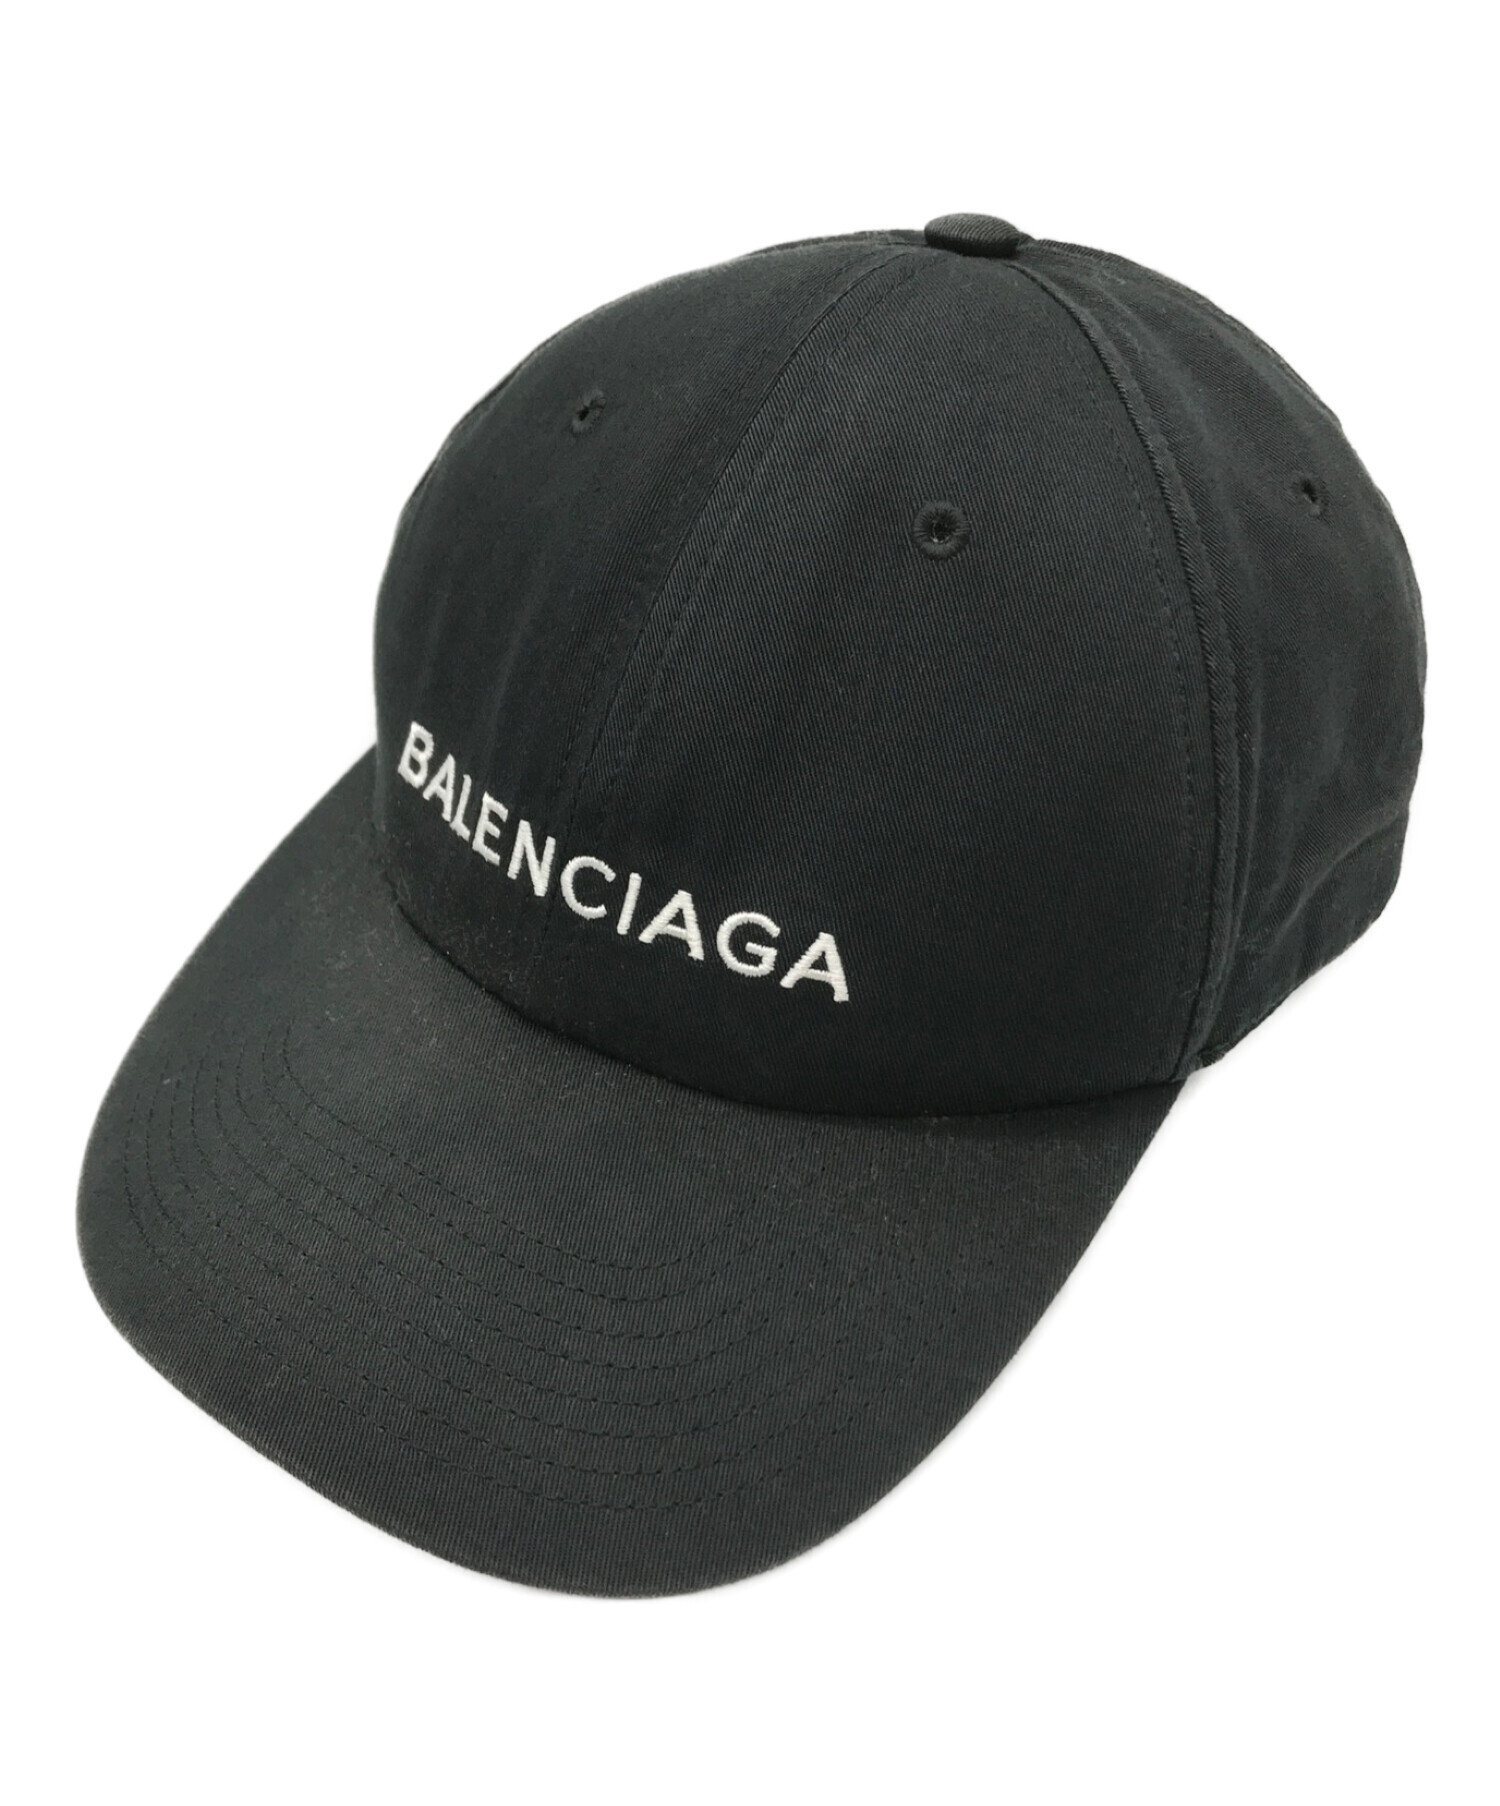 BALENCIAGA (バレンシアガ) ロゴ刺繍 ベースボールキャップ サイズ:L 59